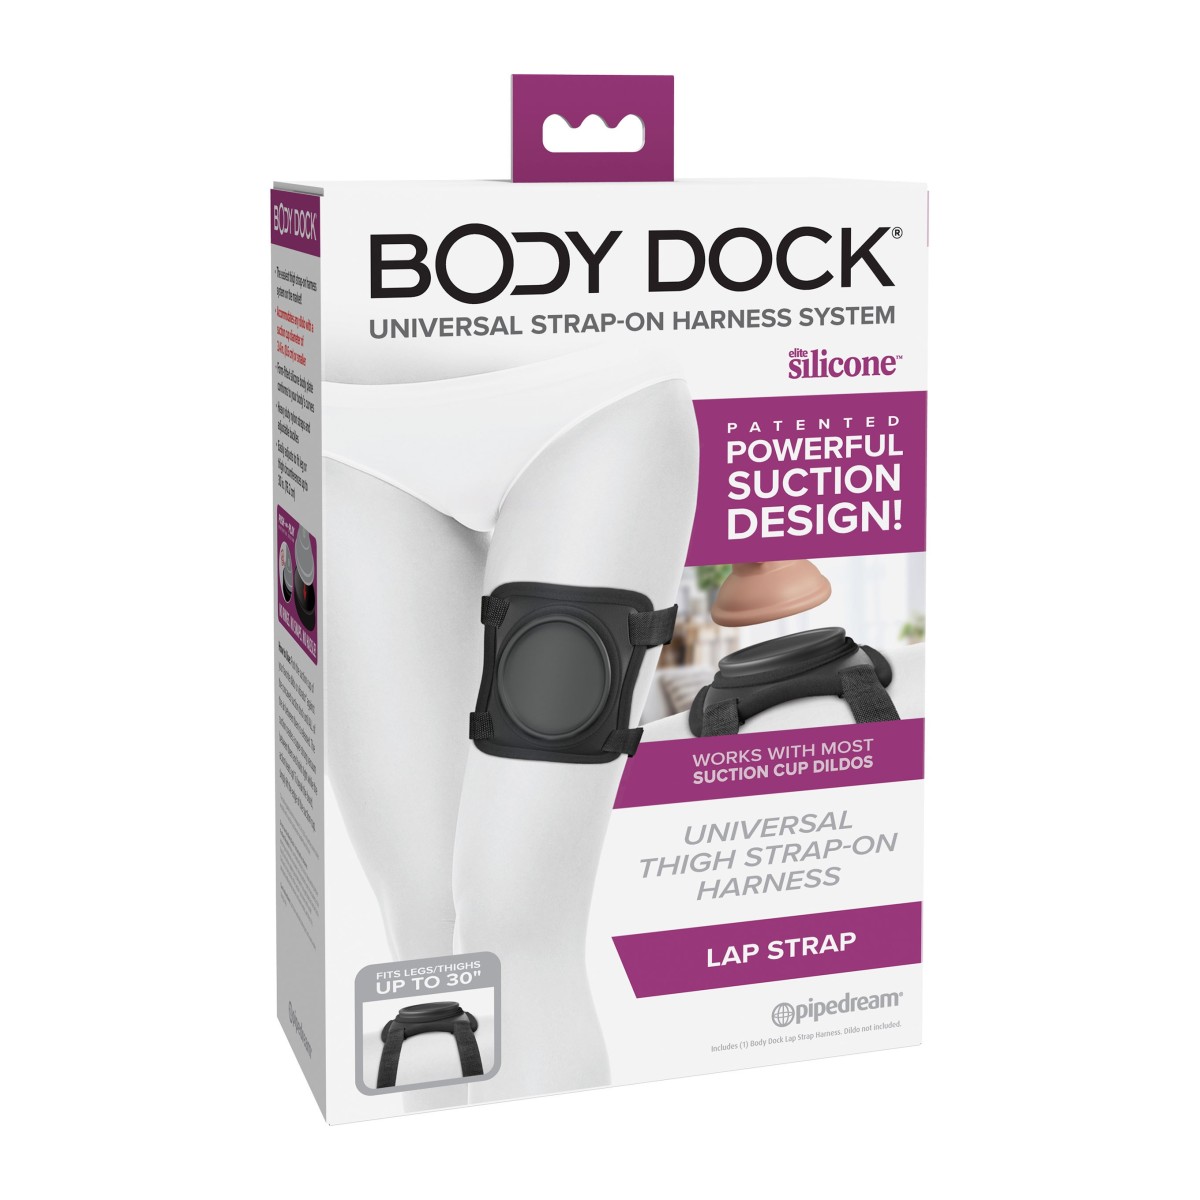 Cintura strap on per gamba Body Dock Lap Strap Harness